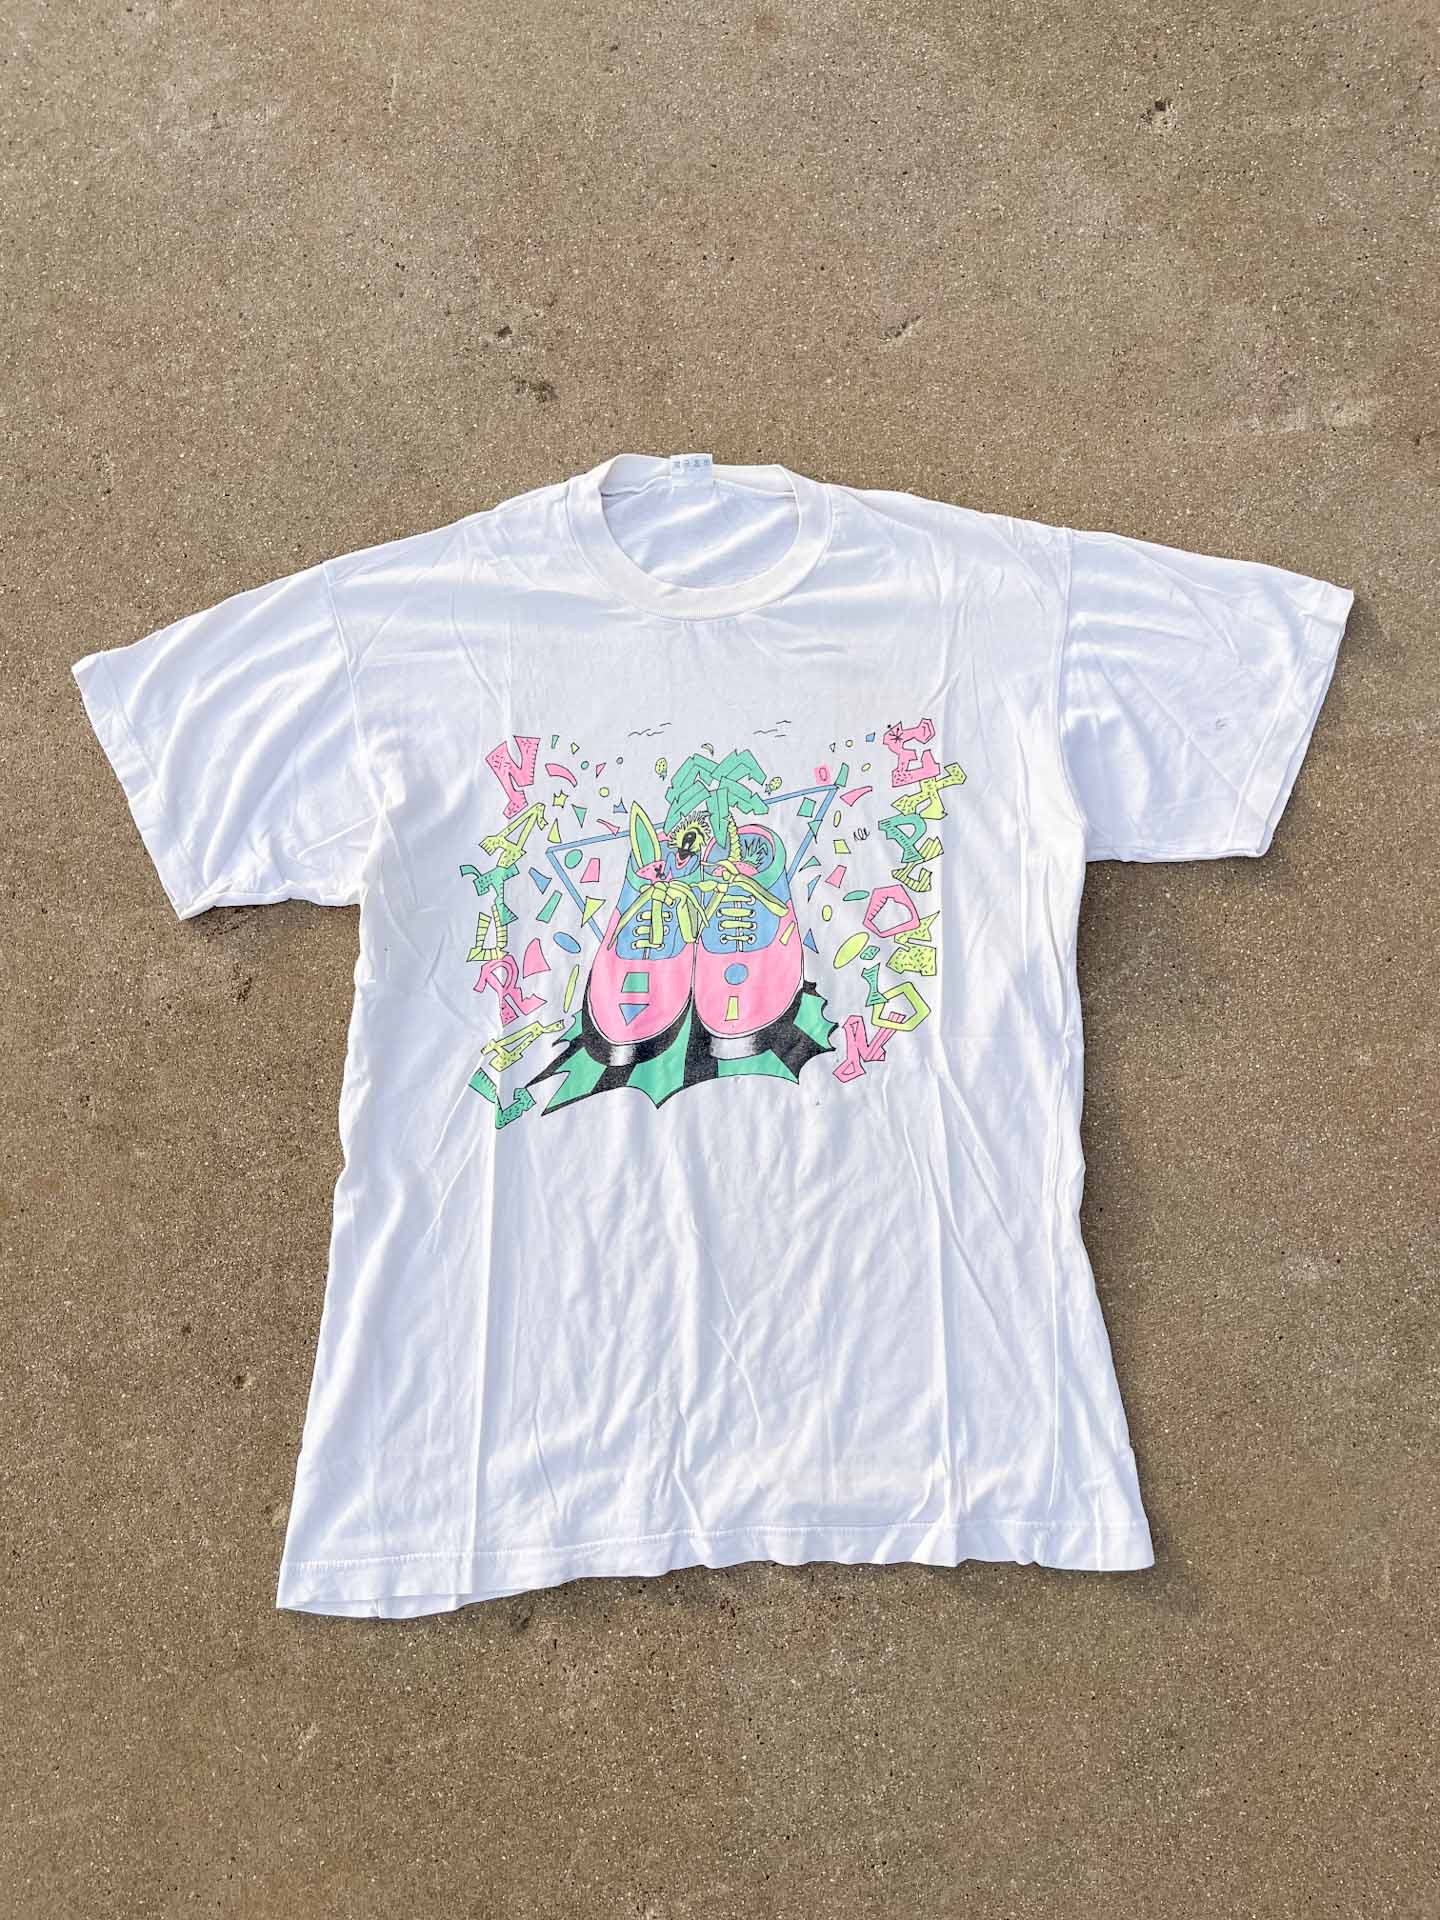 Sun Tropical graphic shirt